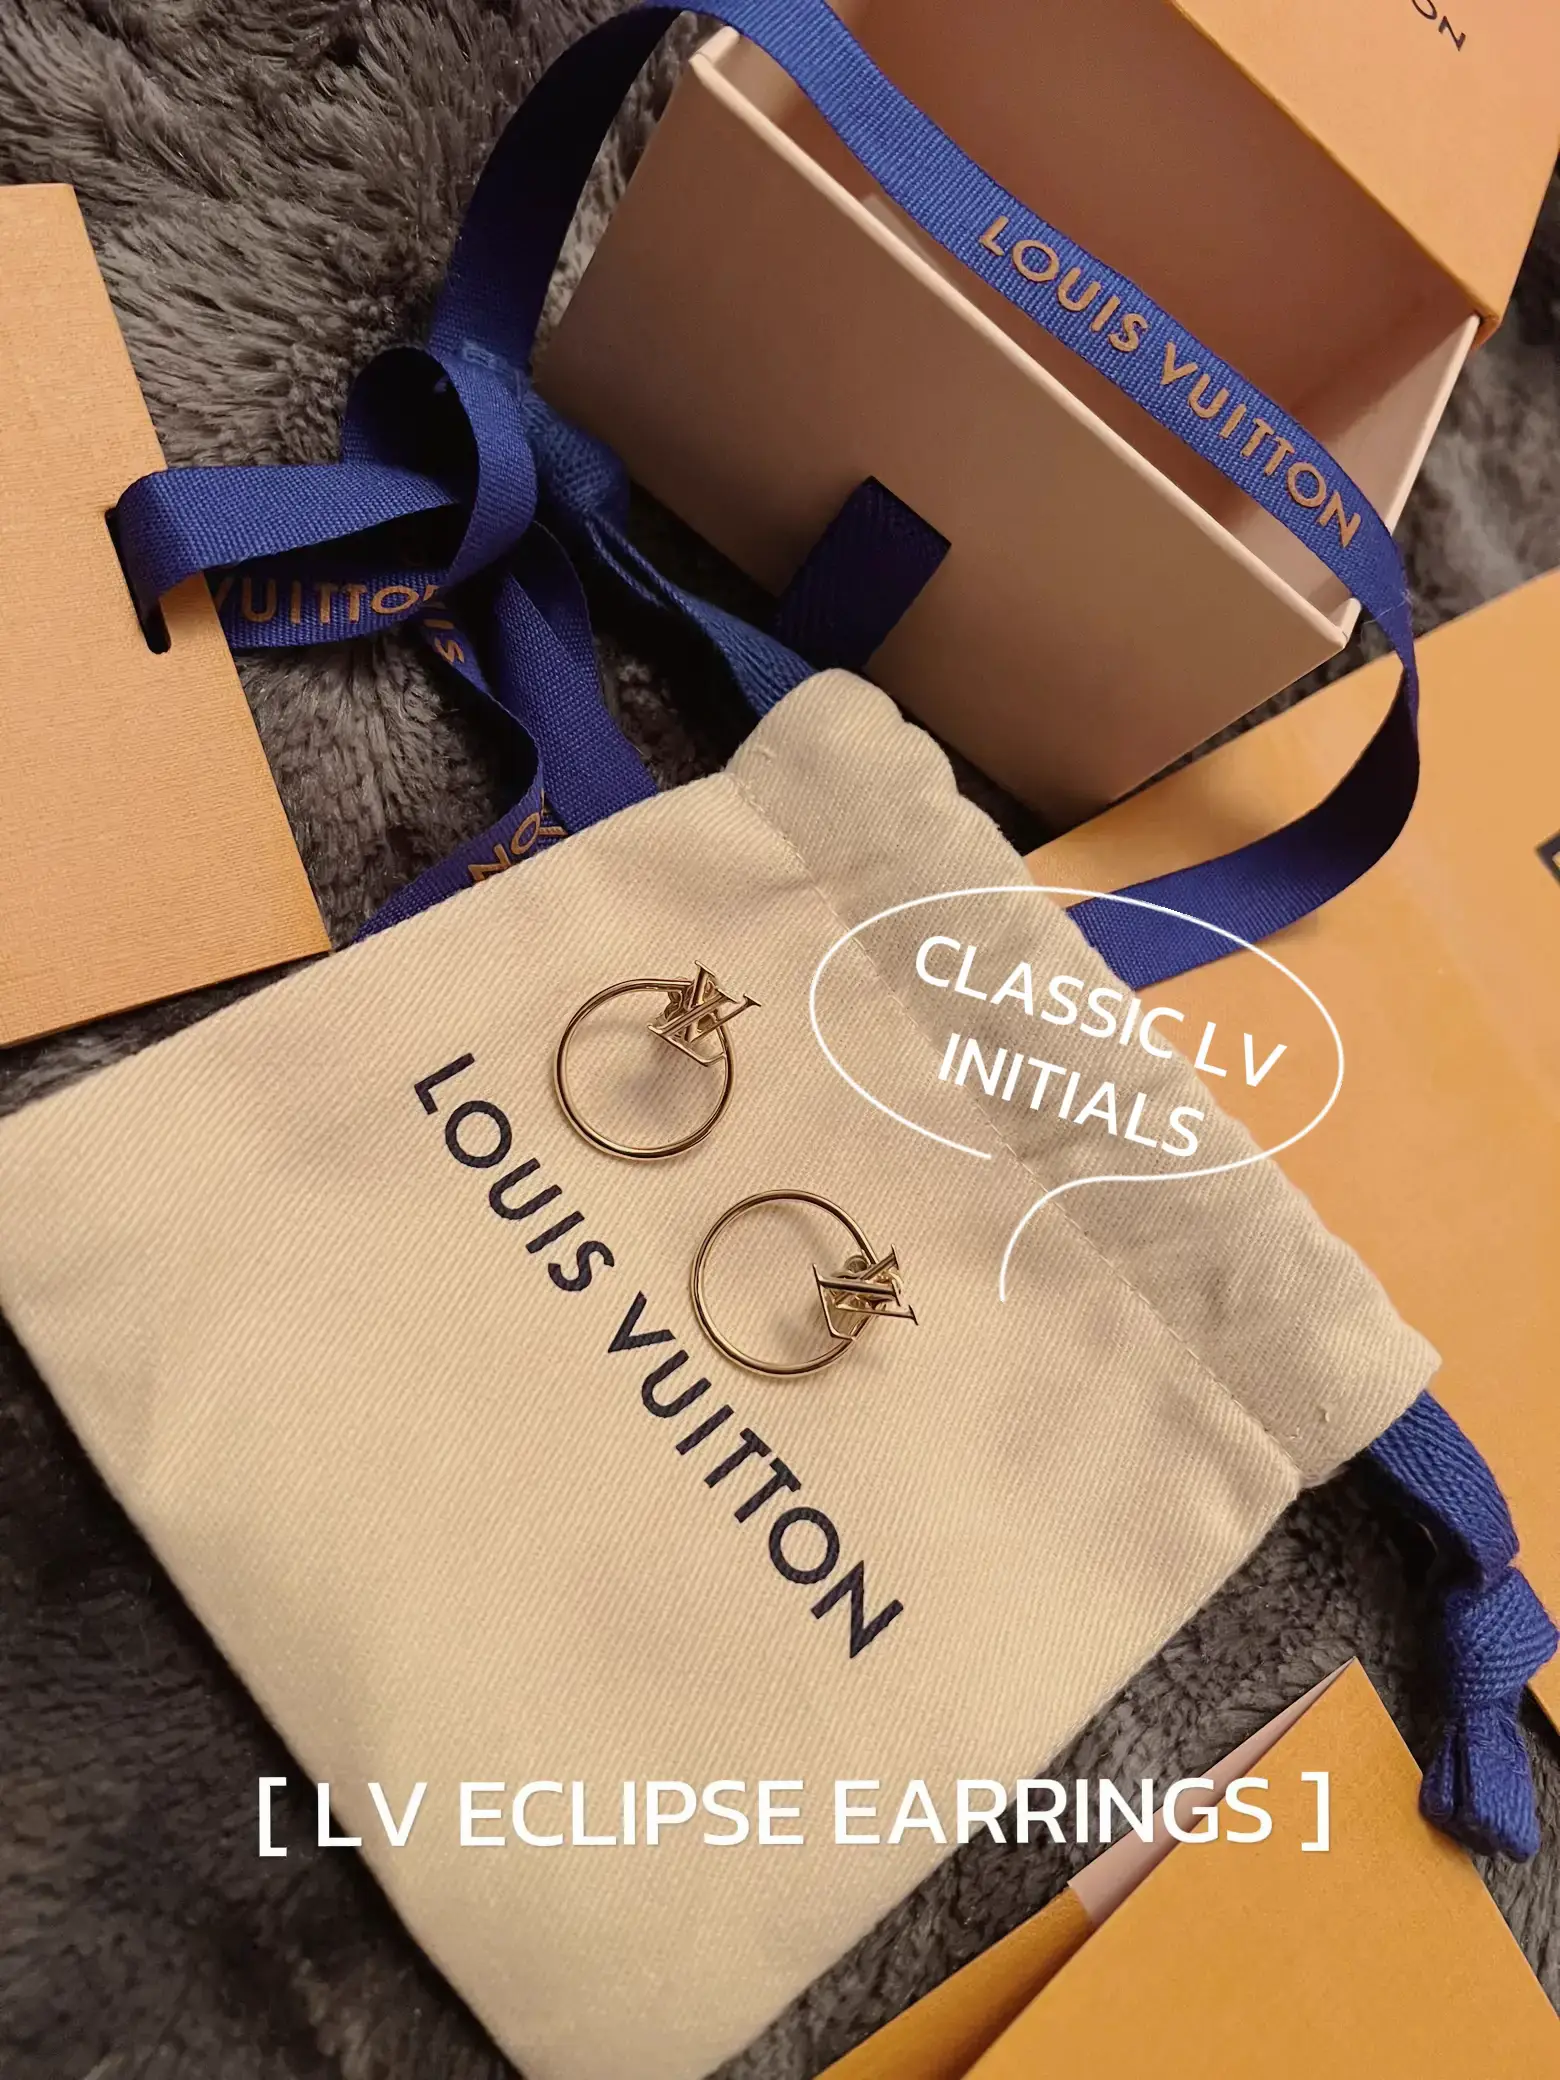 Looking for a super cute Louis Vuitton gift under $100? I've got just , louisvuitton